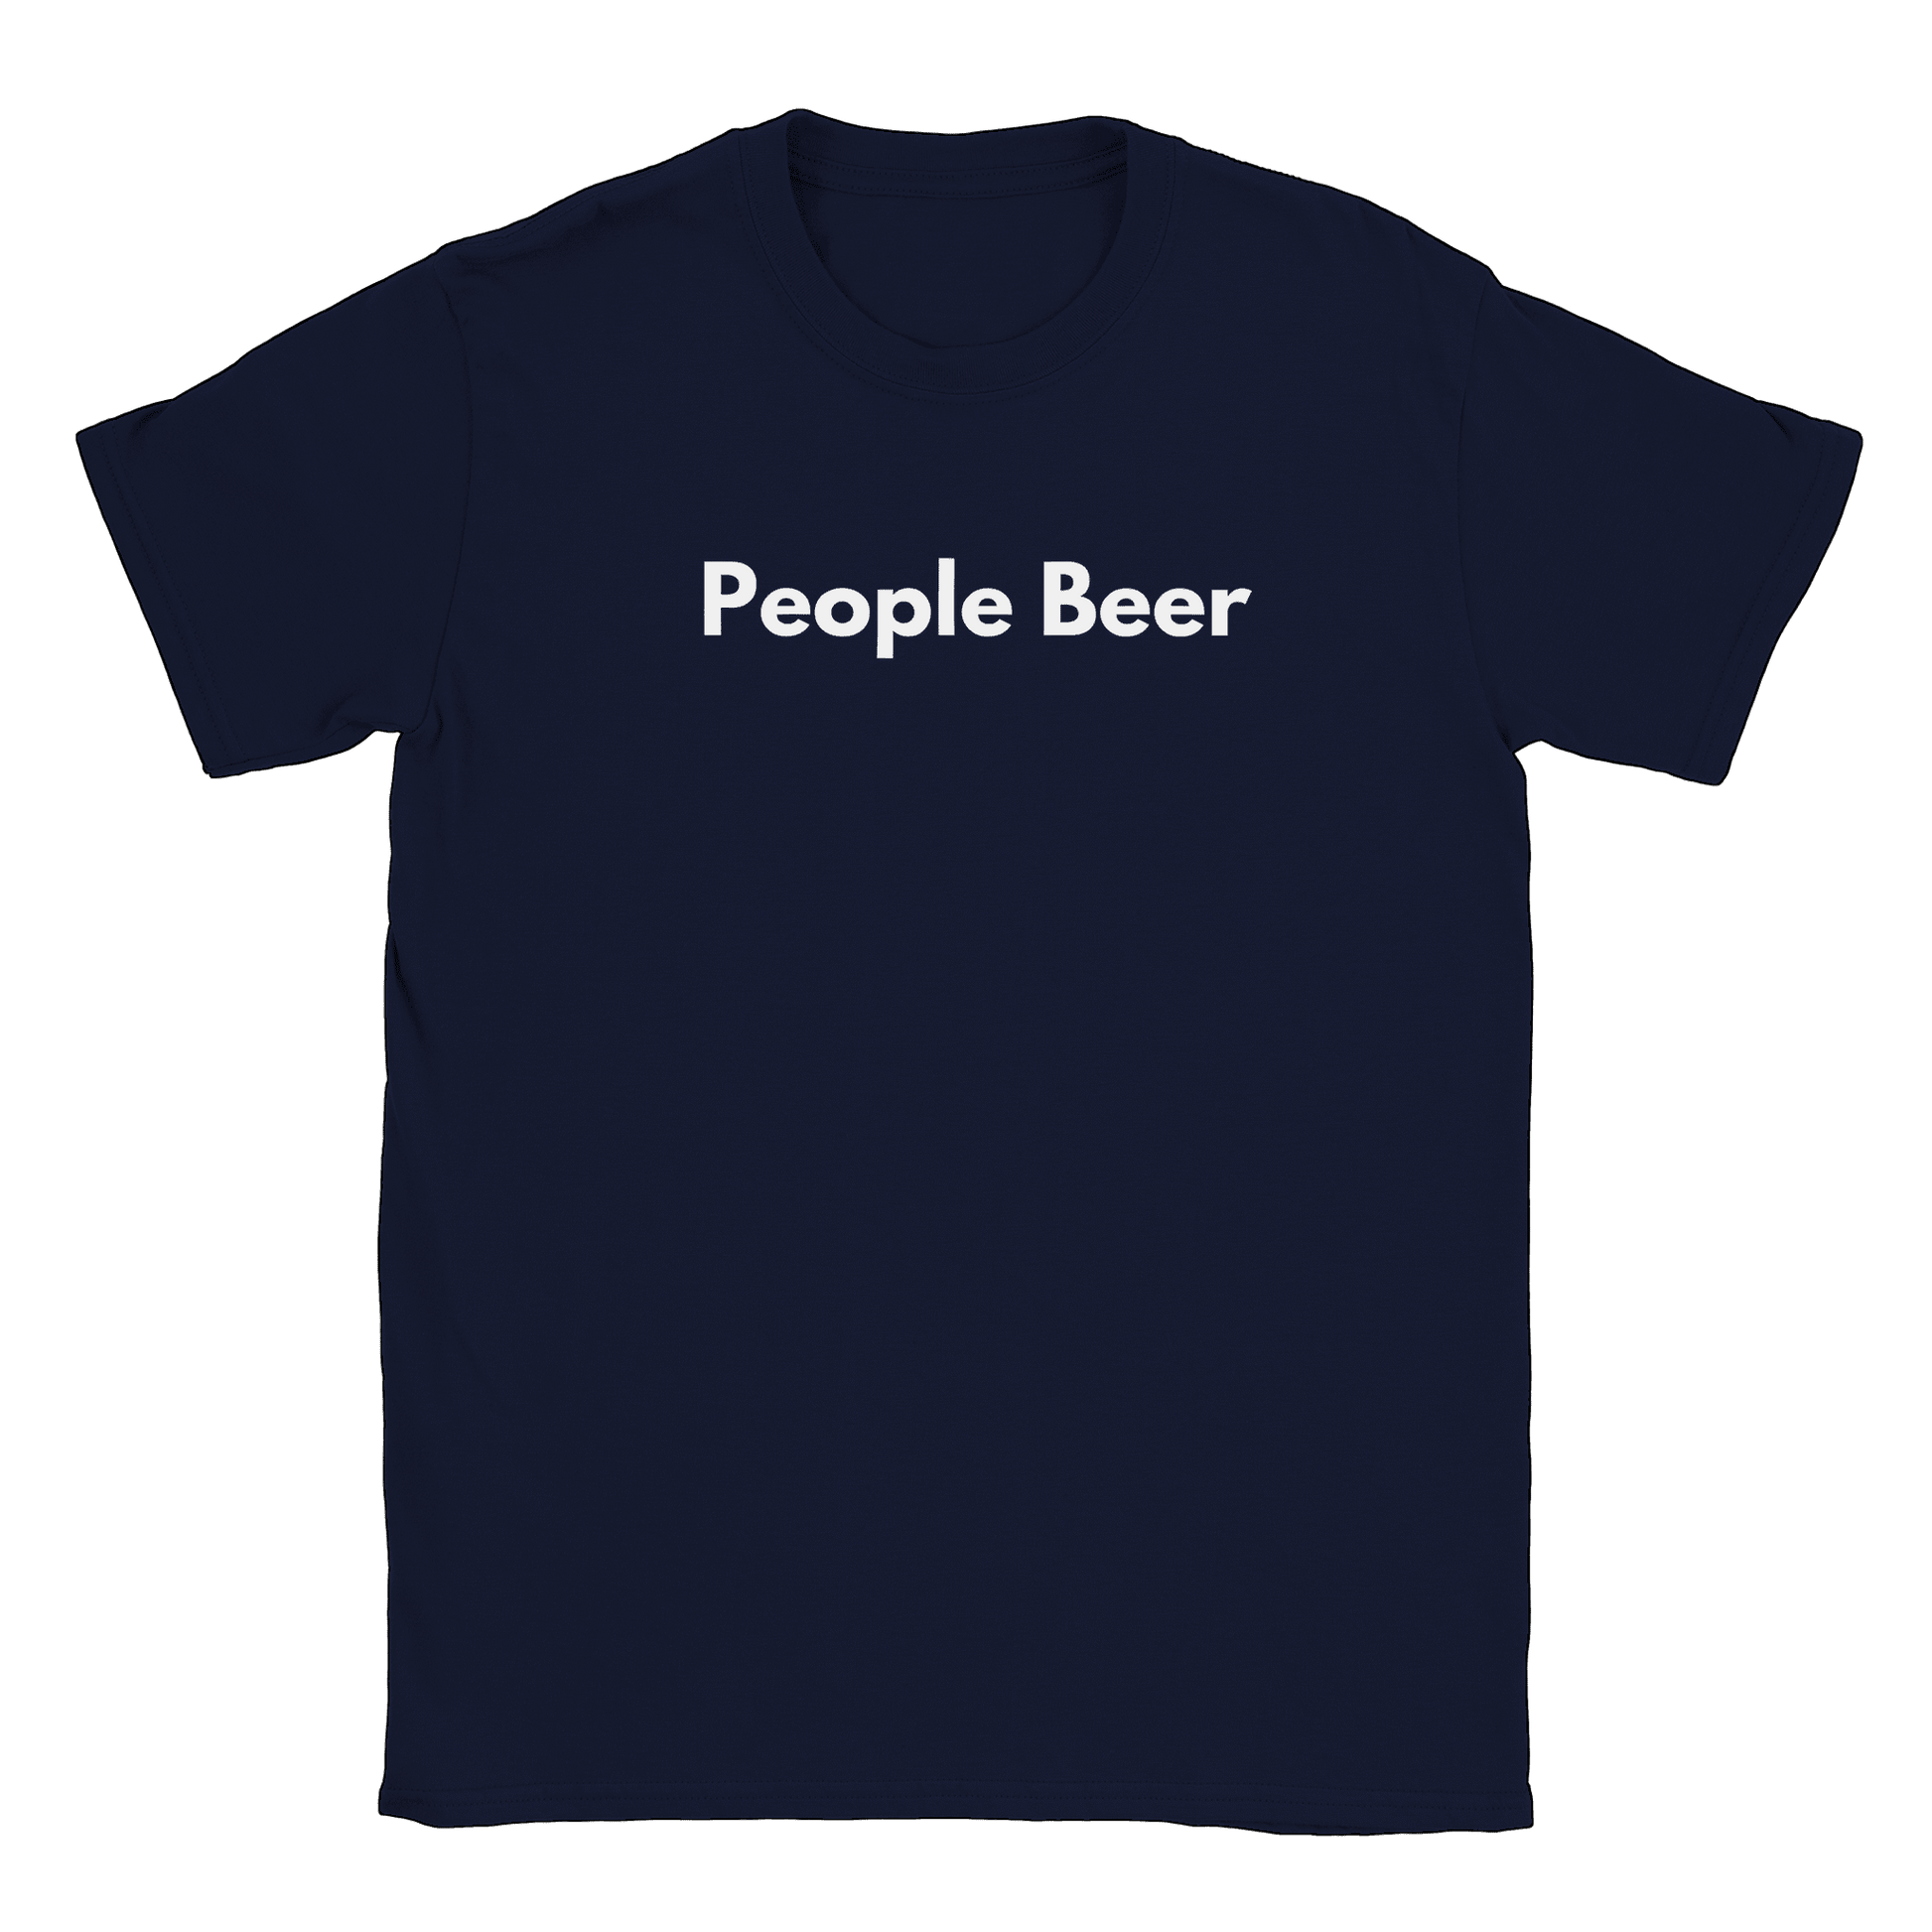 Folköl - T-shirt Navy